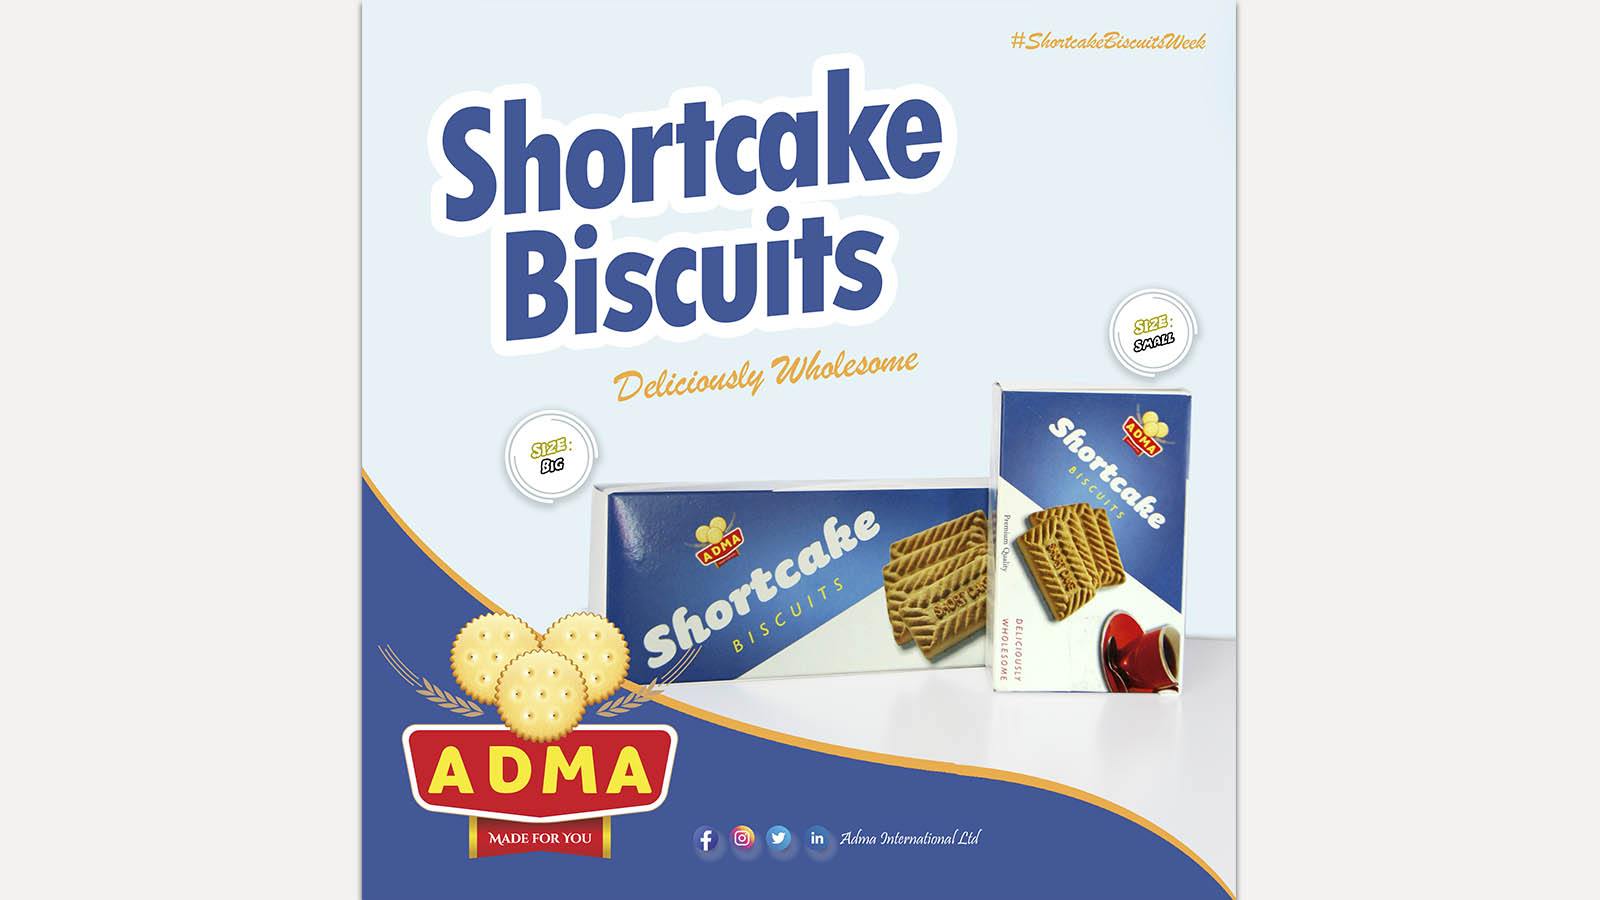 Adma_Shortcake Biscuits